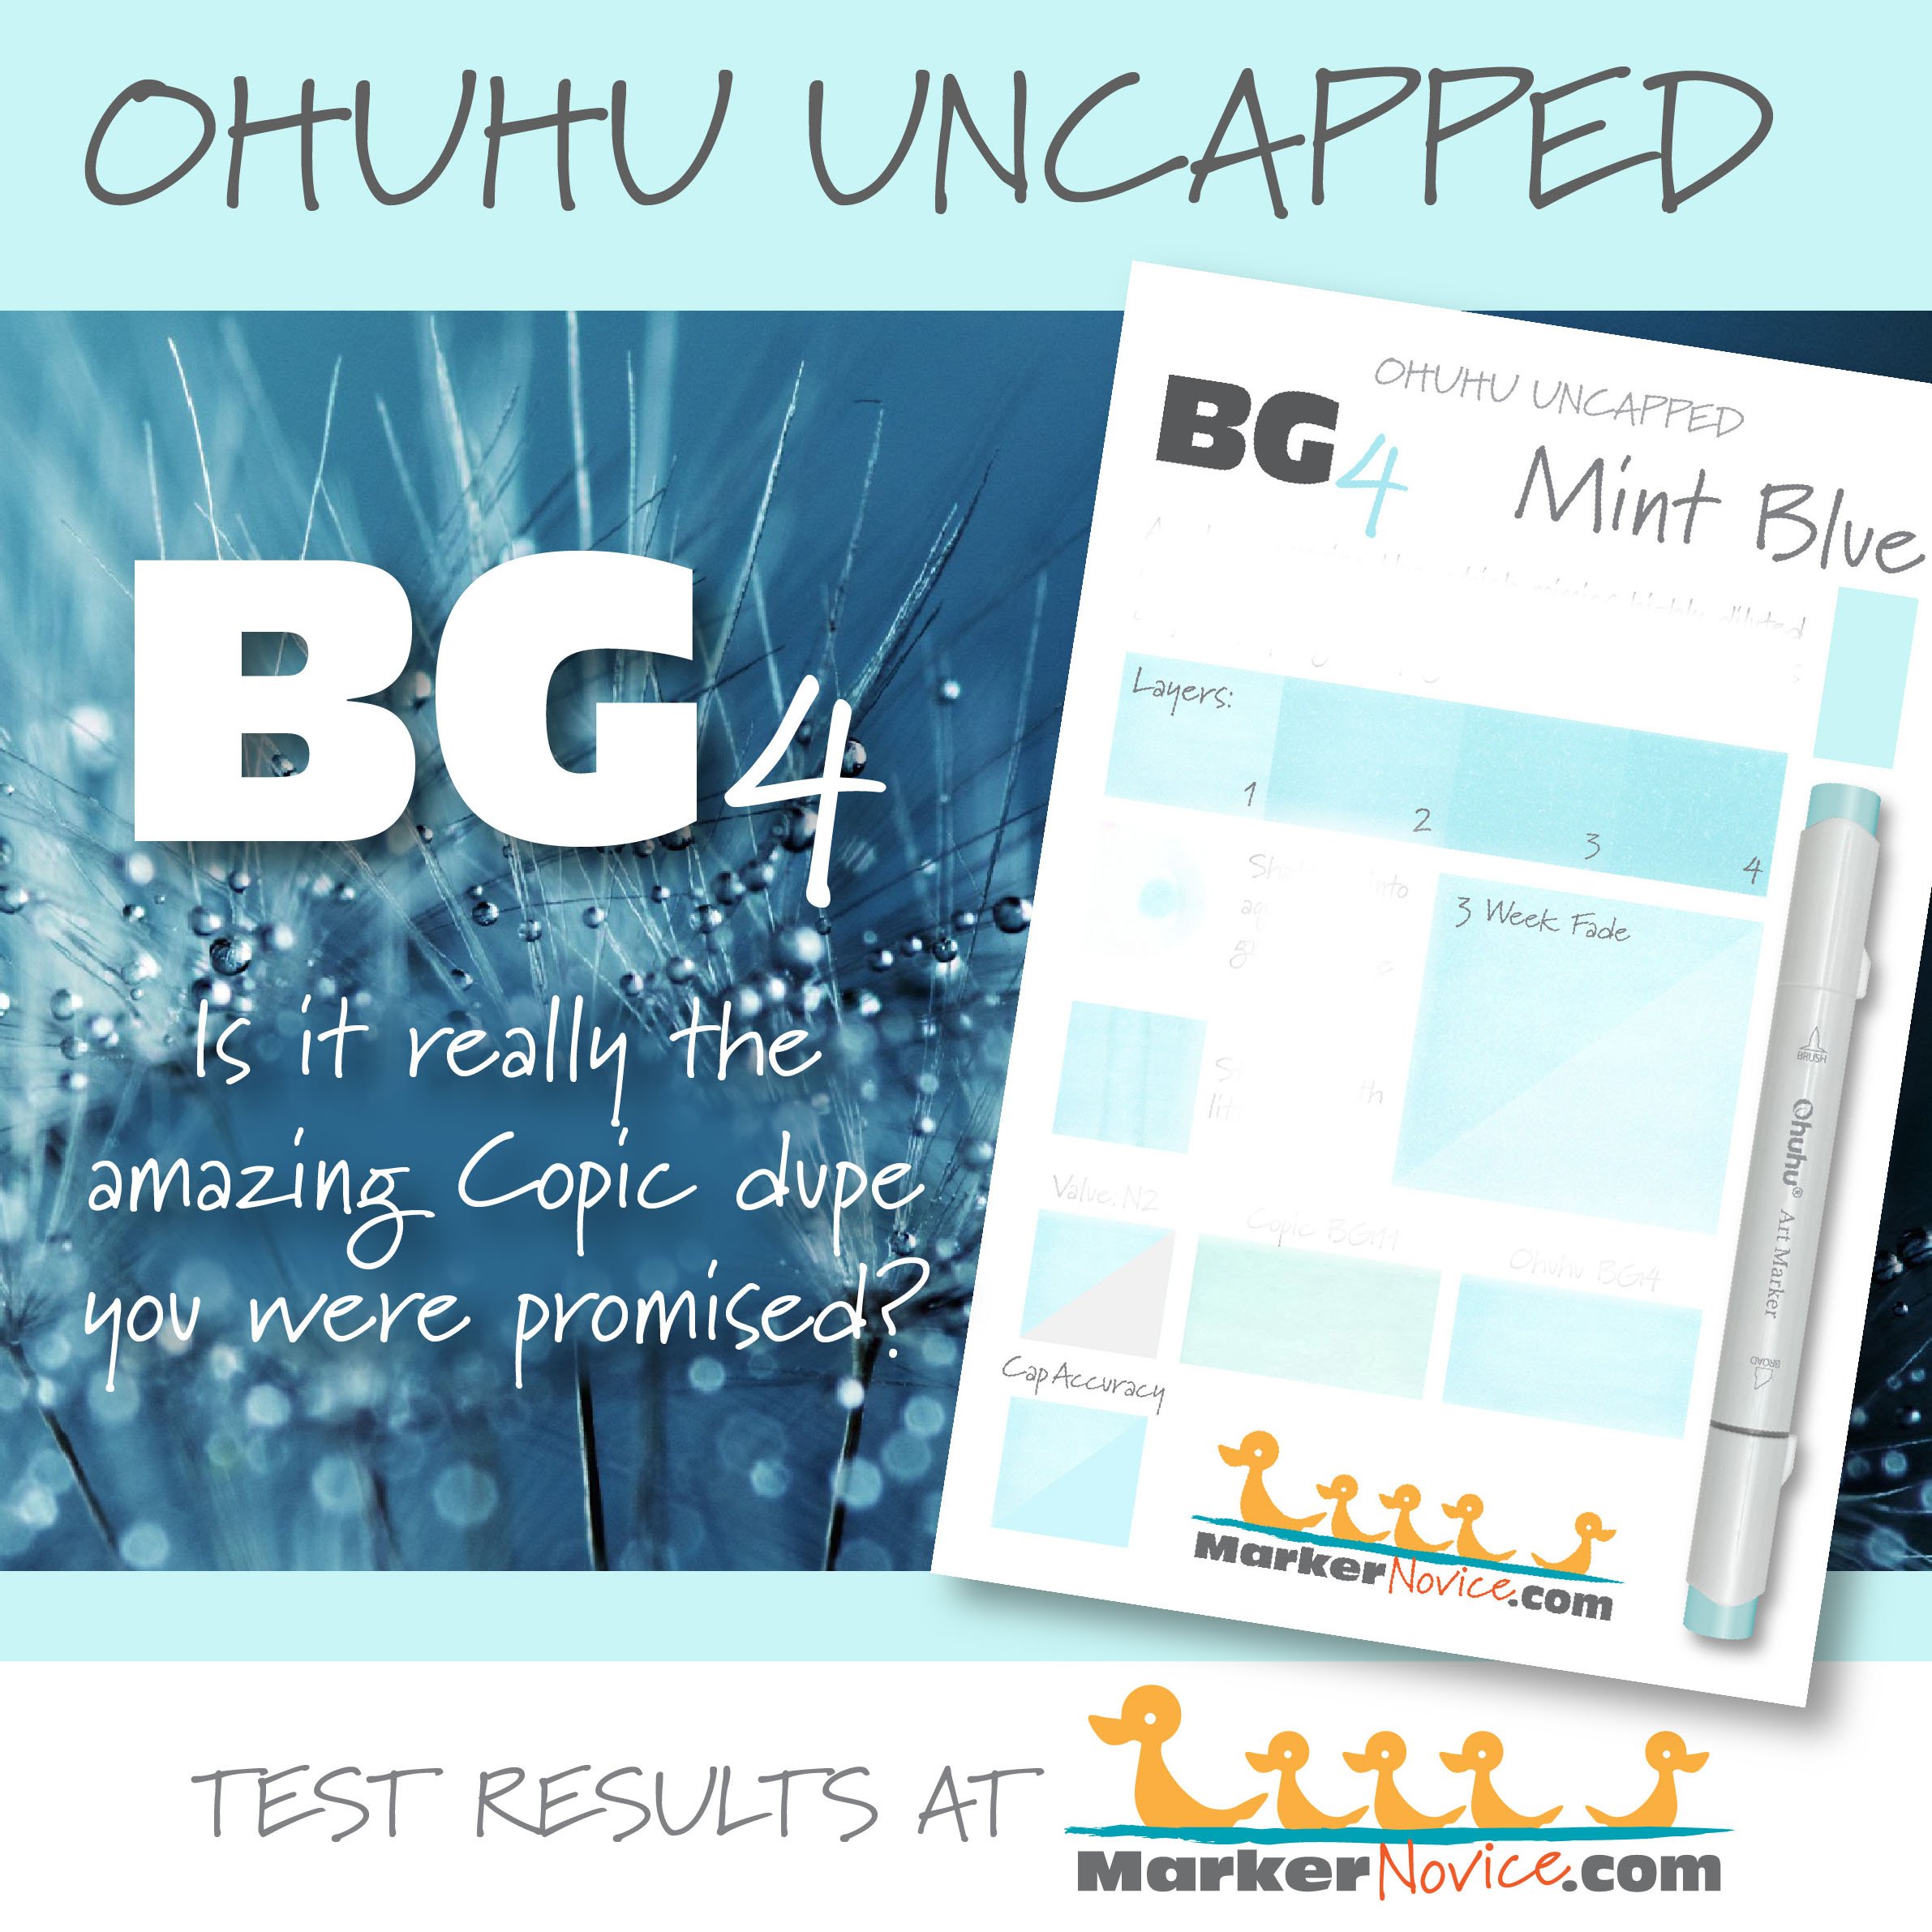 BG050 Cool Grey 05: Testing Ohuhu Markers for Lightfastness and